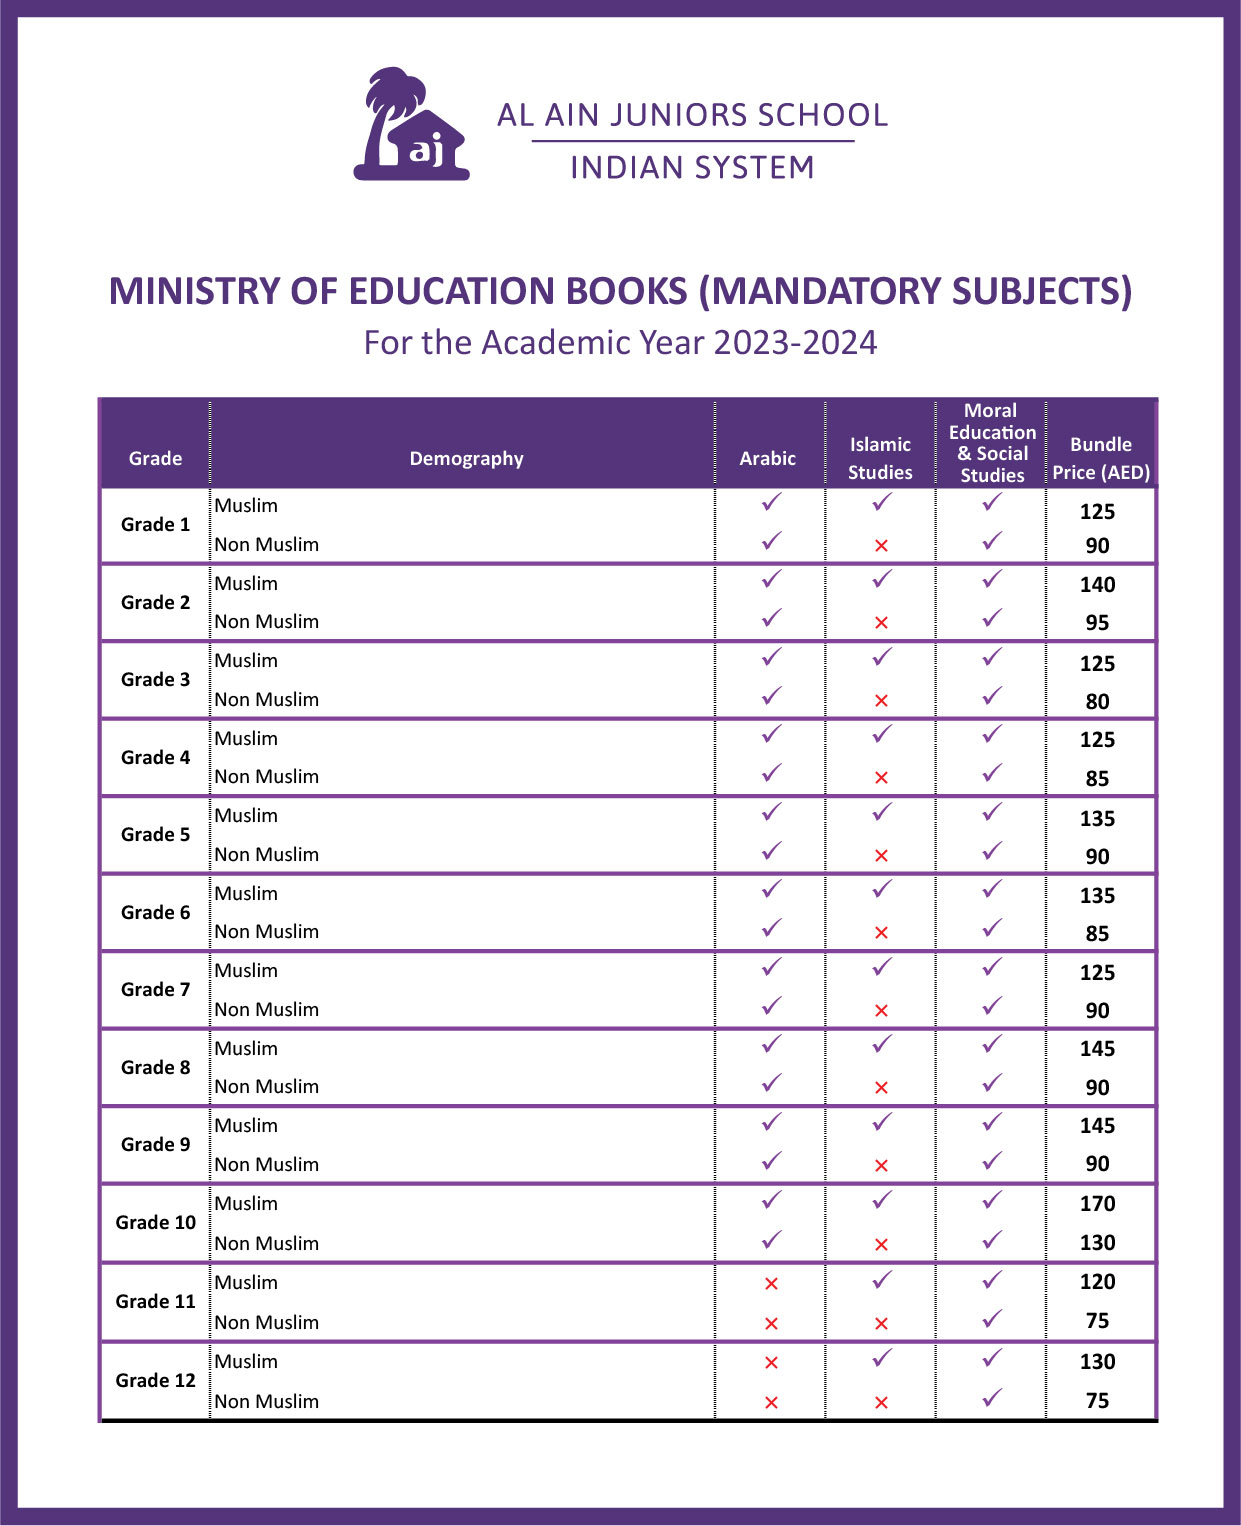 AJI Ministry of Education Books Mandatory Subjects 2022 2023 01